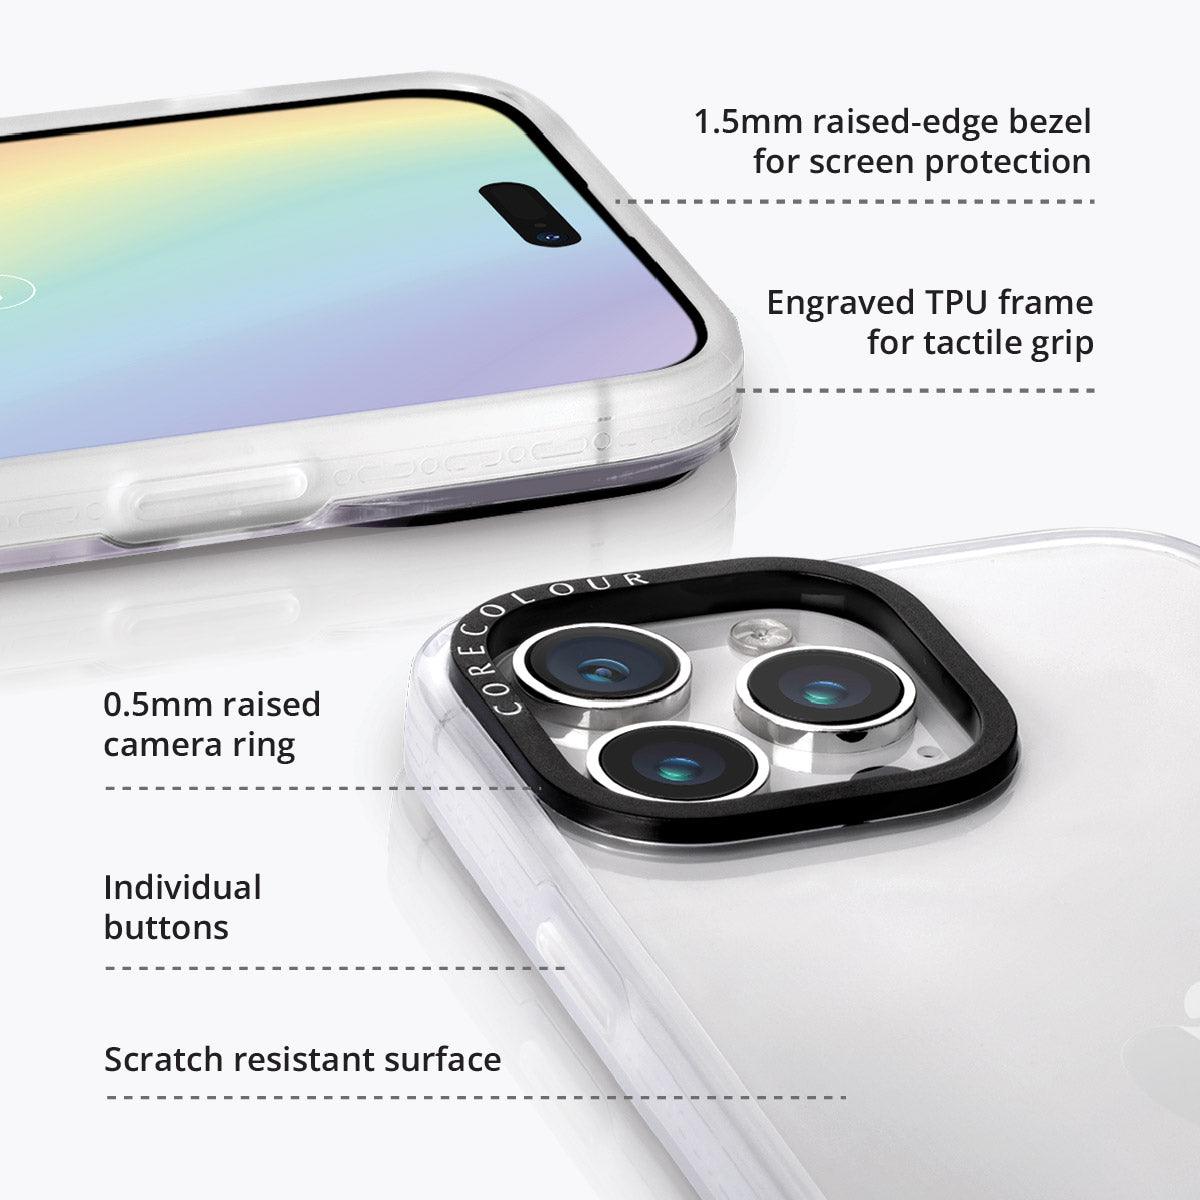 iPhone 14 Pro Max White Flower Mini Phone Case - CORECOLOUR AU